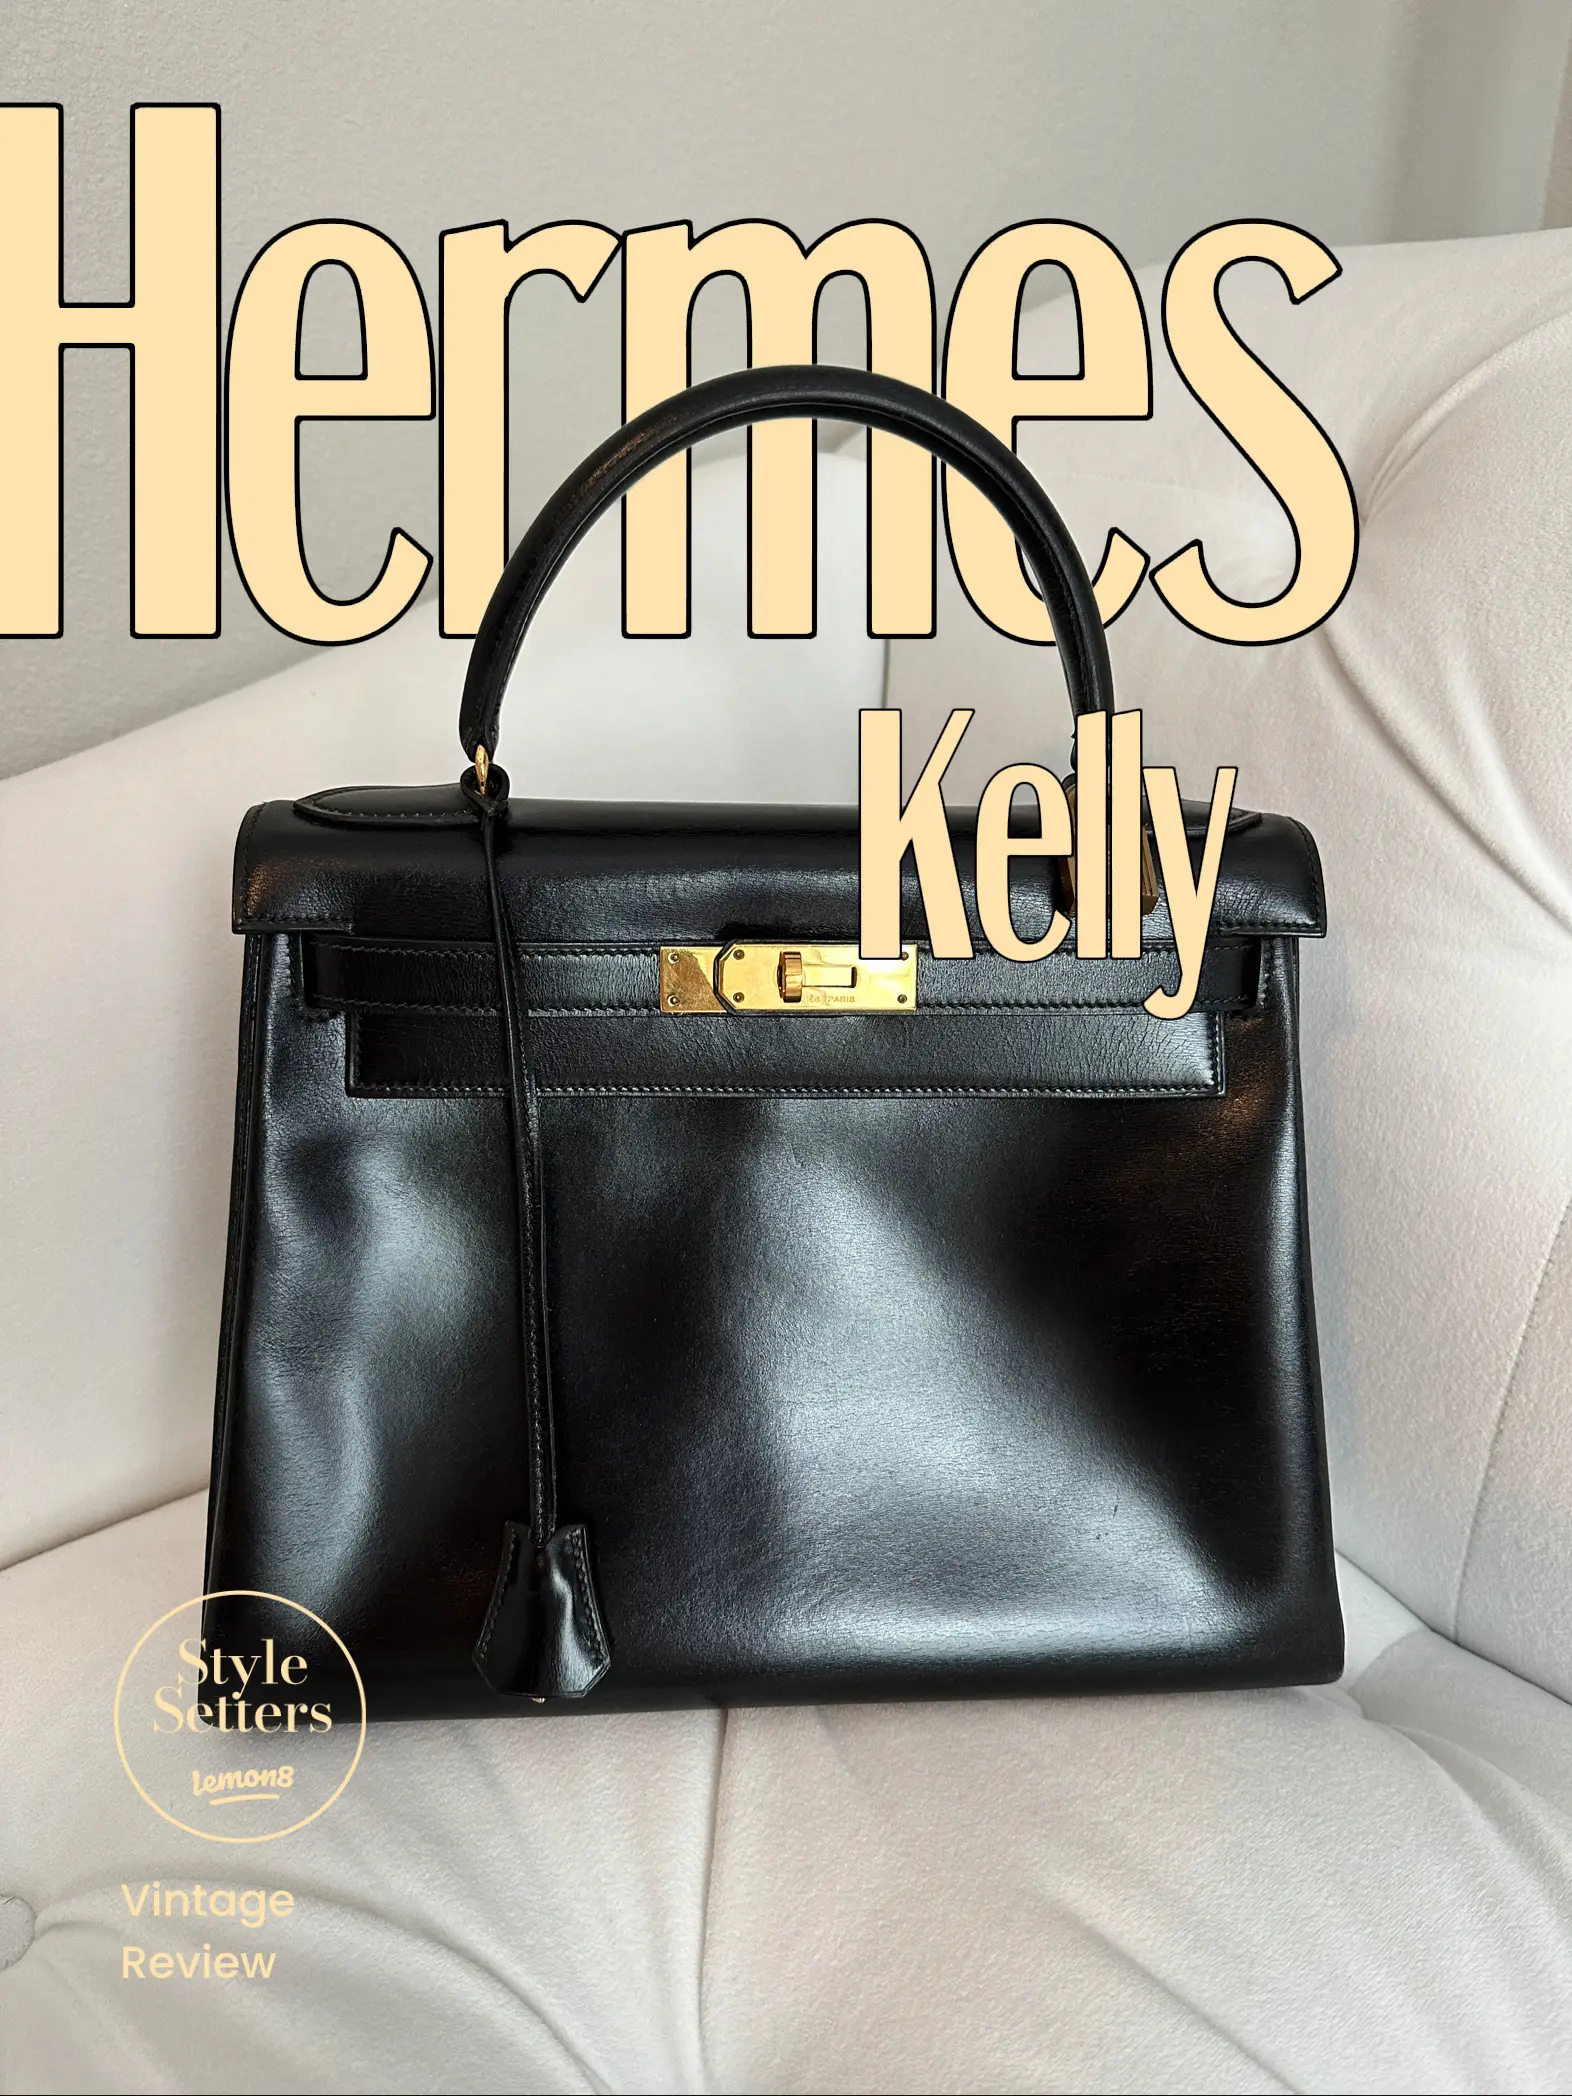 Vintage Hermès Kelly 28 Review, Worth the Price?!